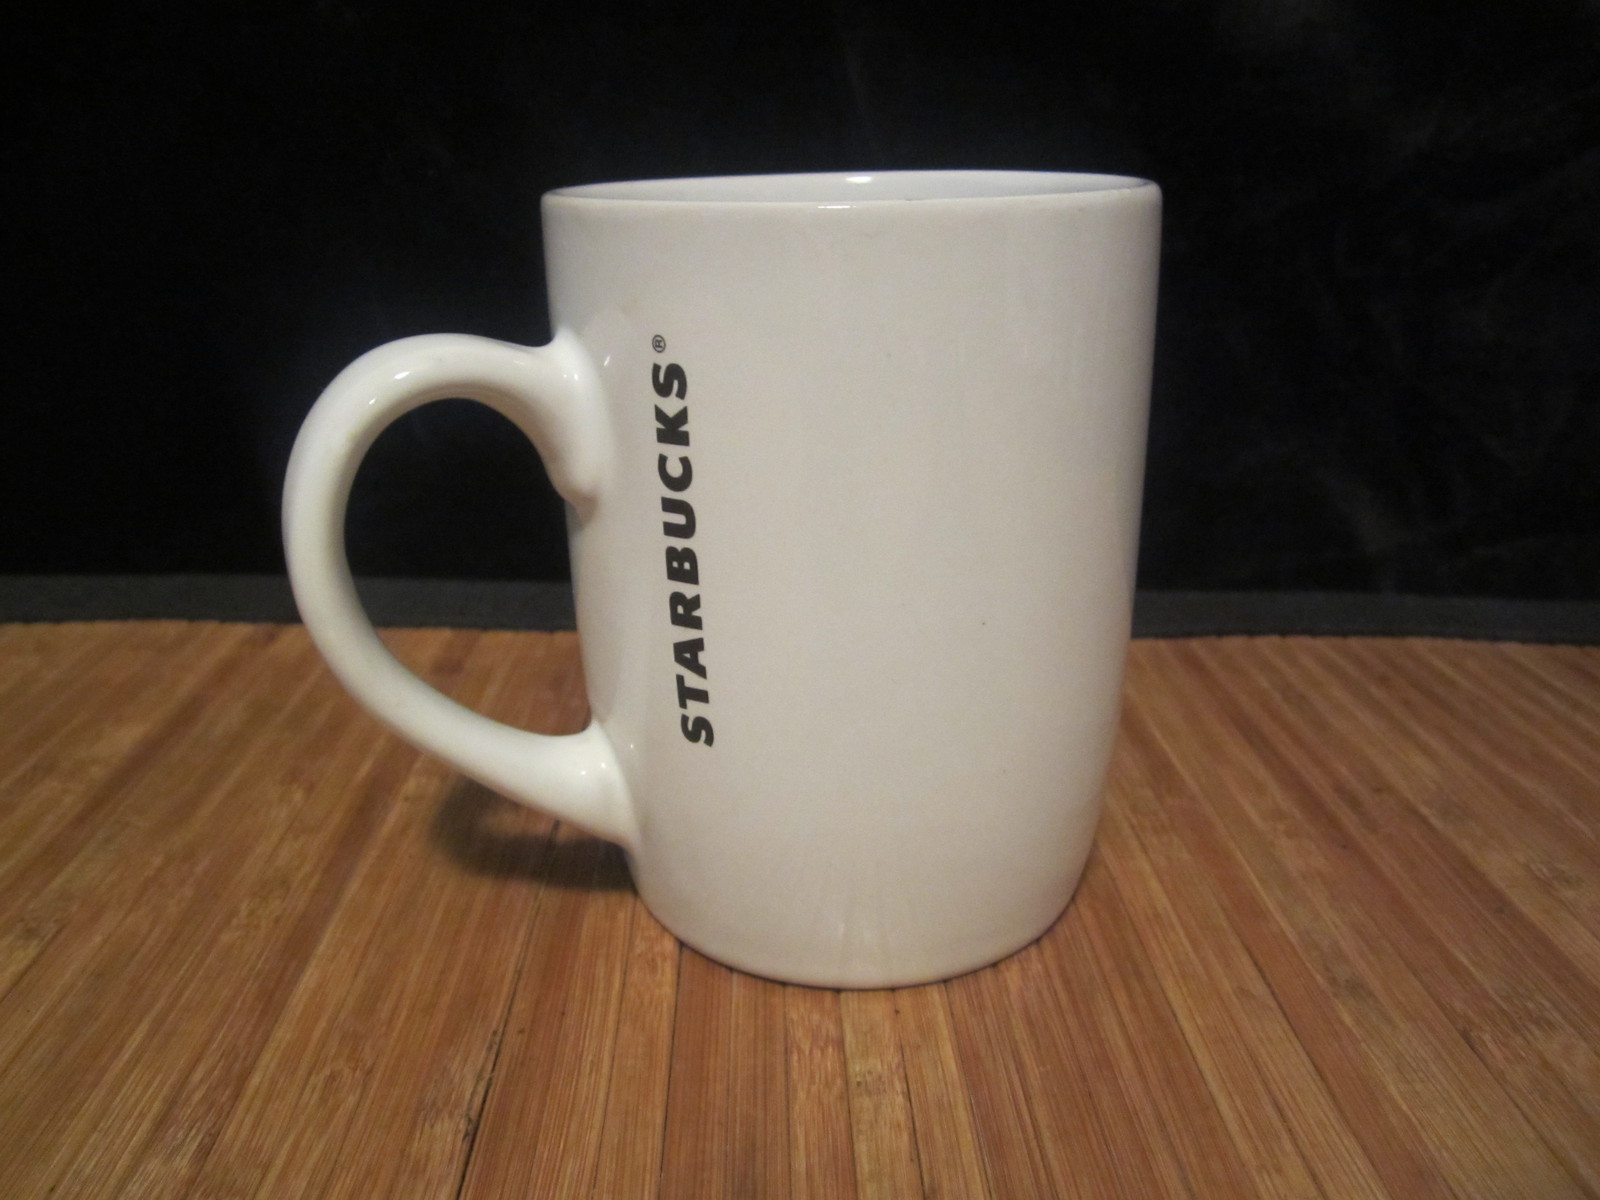 Primary image for 2012 Starbucks Coffee Mug Tea Cup White with Green Mermaid logo